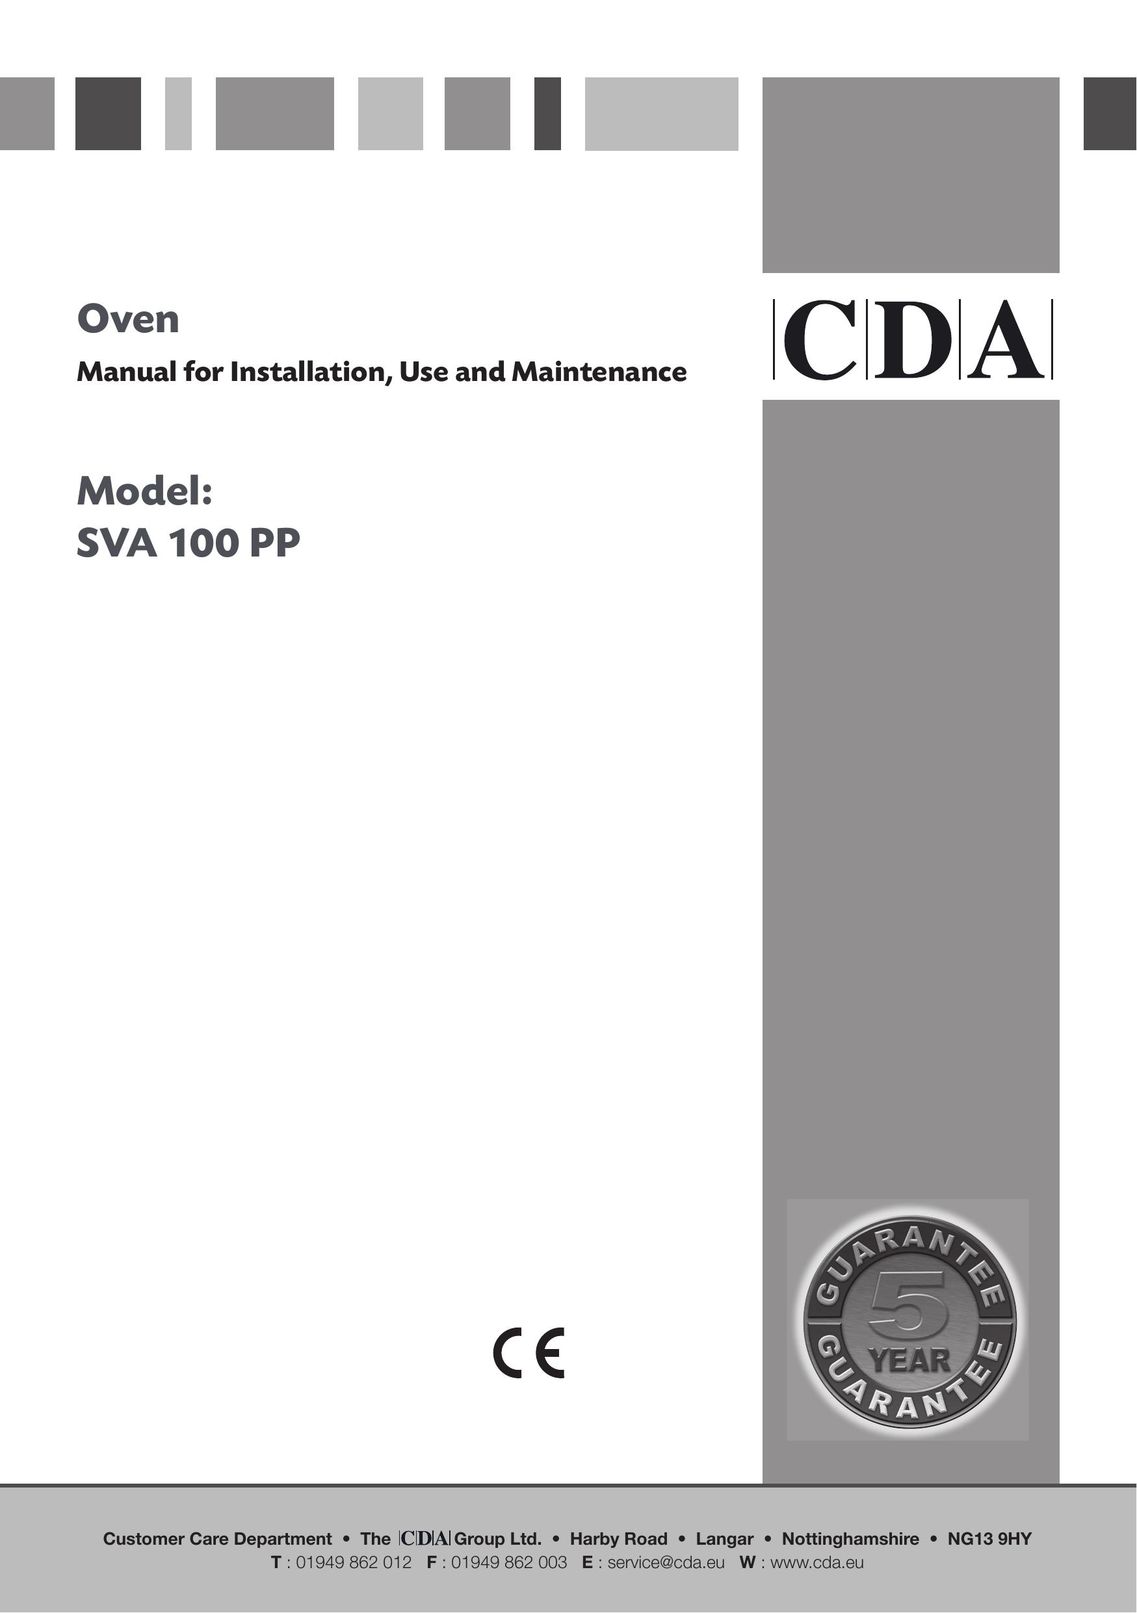 CDA SVA 100 PP Oven User Manual